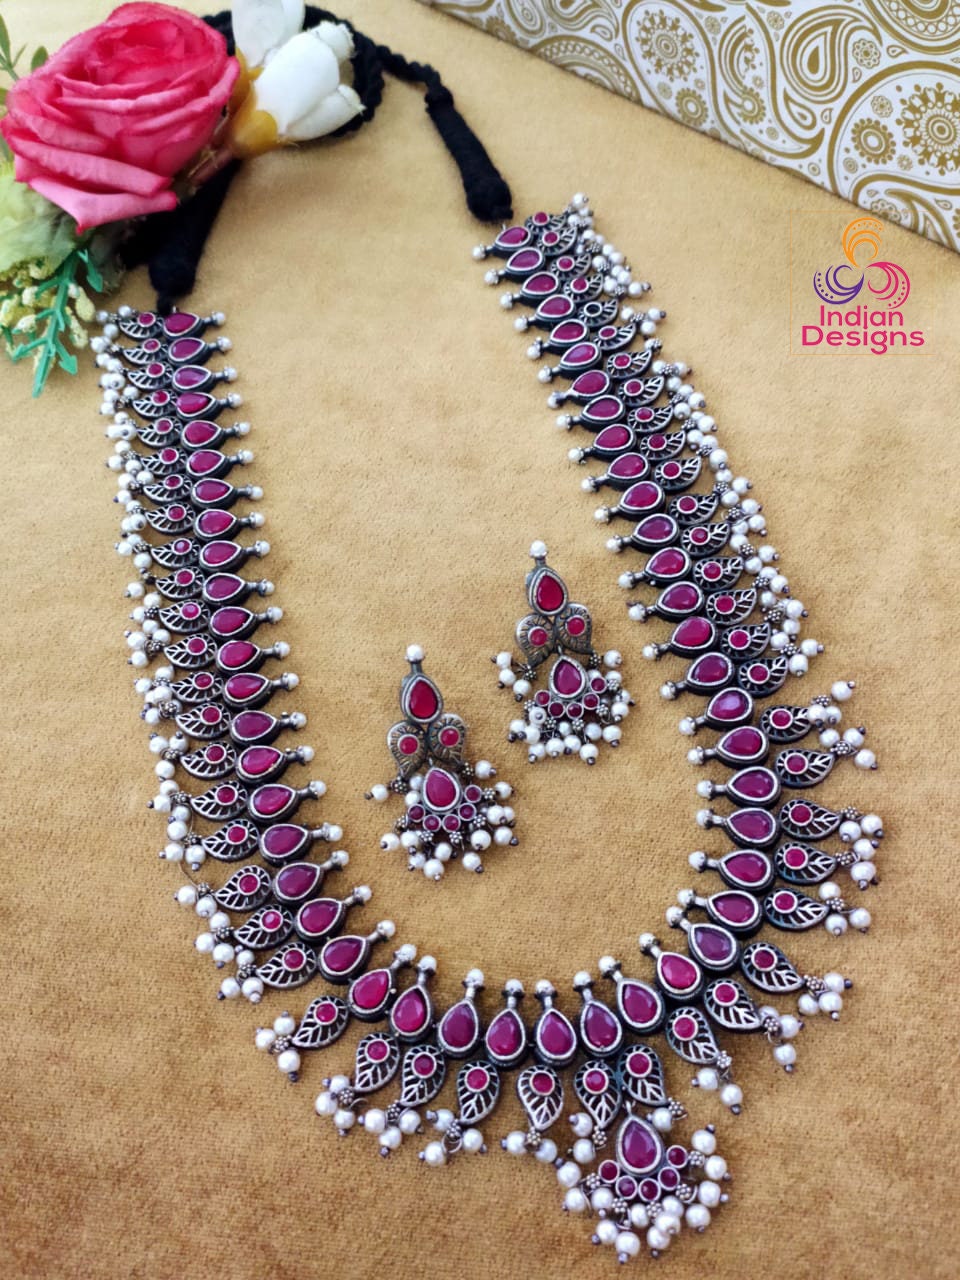 Silver Necklaces for sale in Kolkata | Facebook Marketplace | Facebook